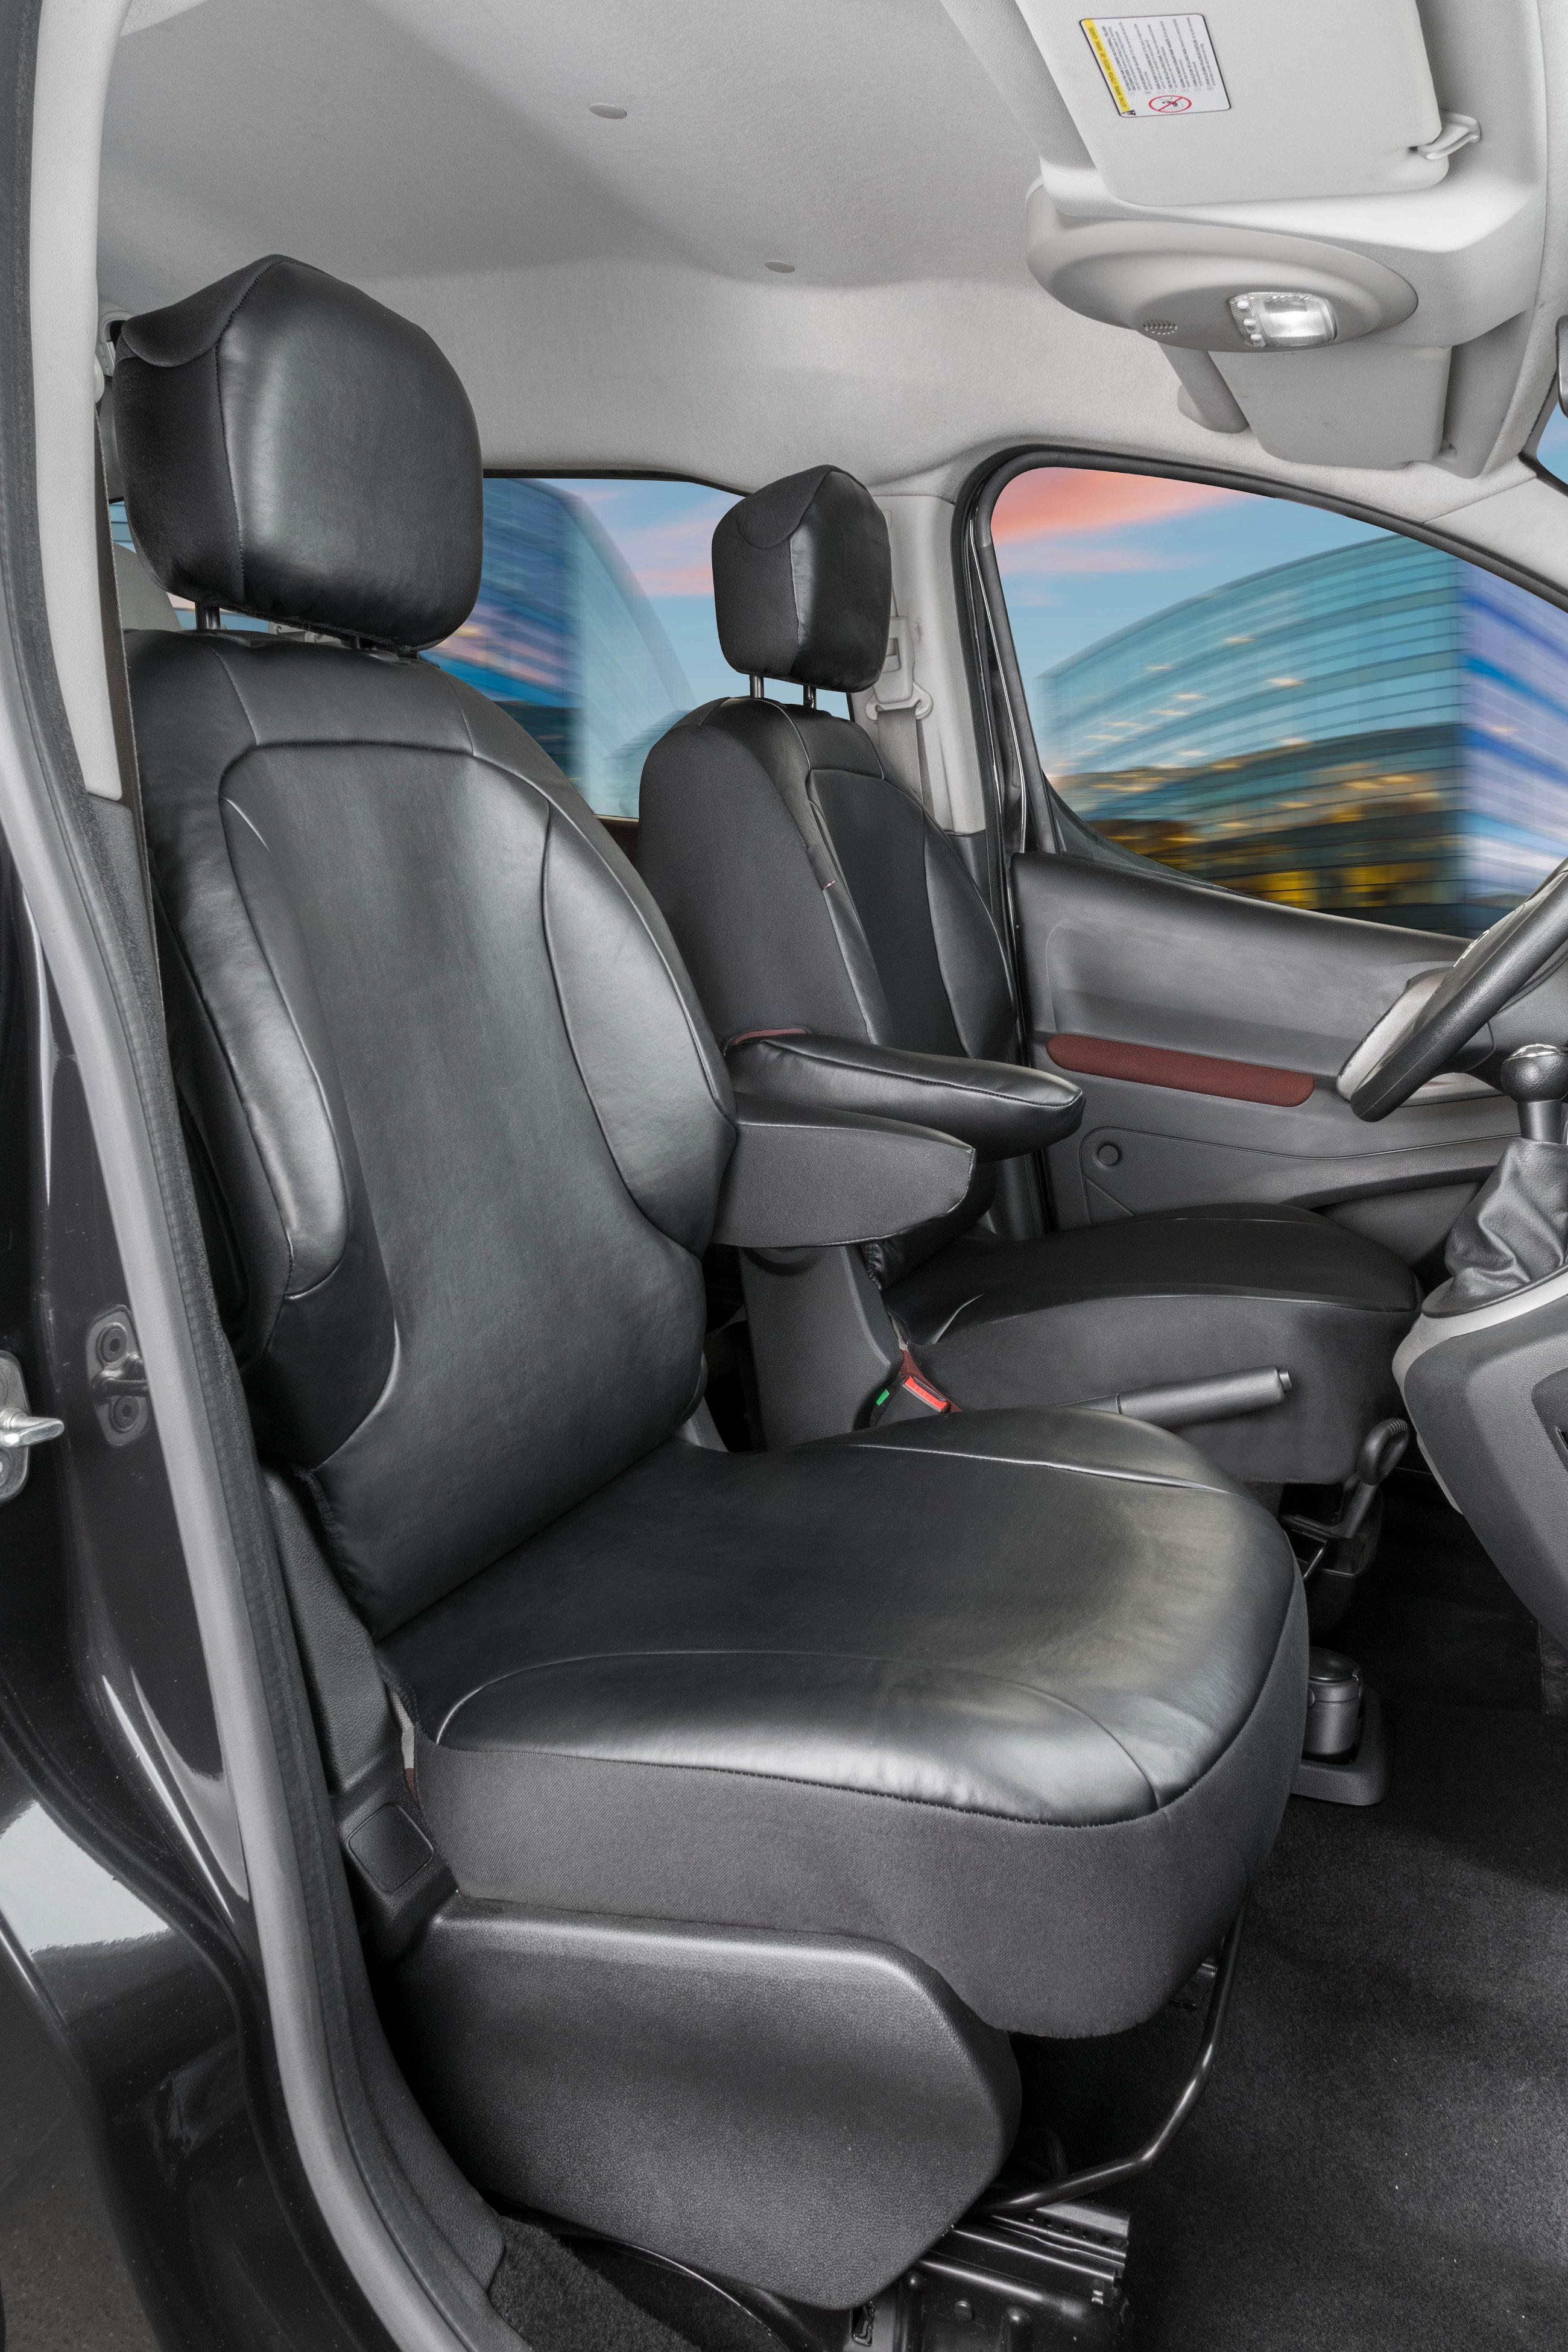 Passform Sitzbezug aus Kunstleder kompatibel mit Citroen Berlingo, 2 Einzelsitze Armlehne innen